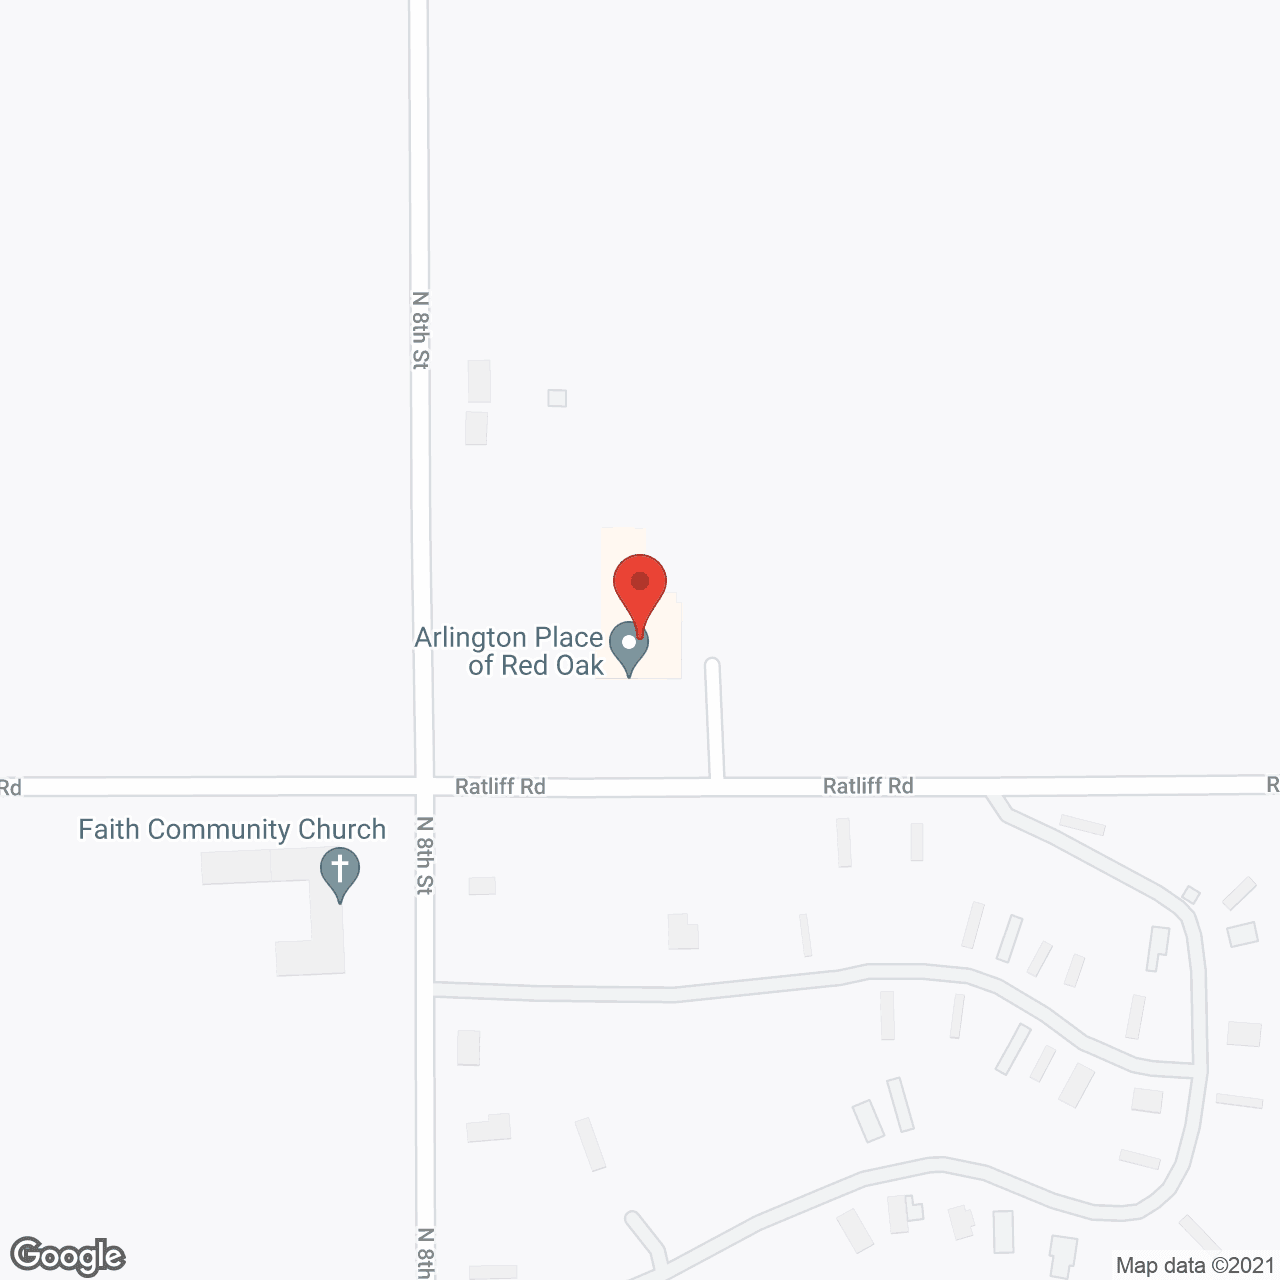 Arlington Place of Red Oak in google map